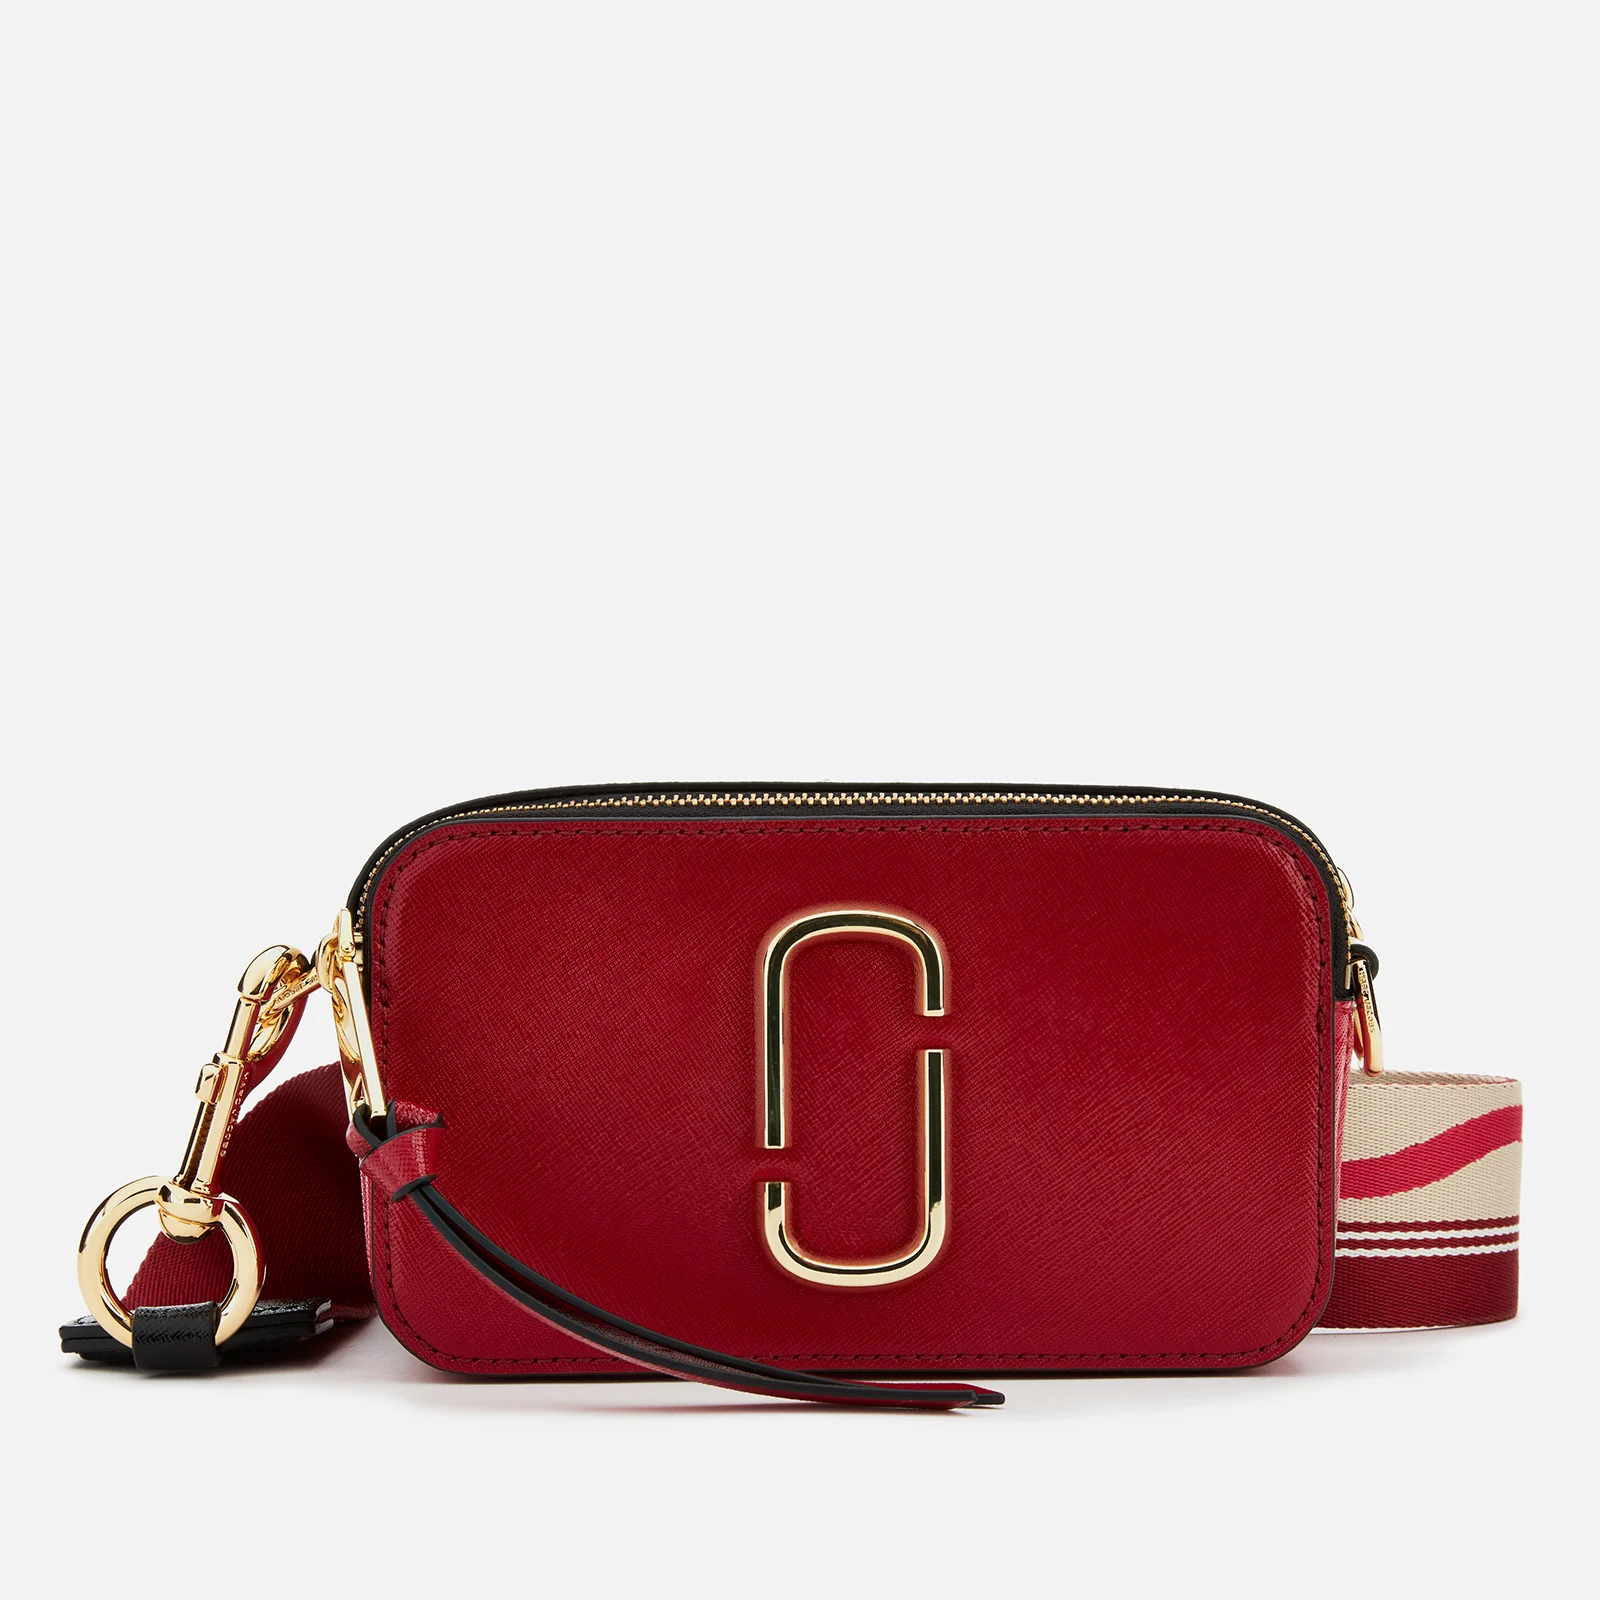 Marc Jacobs Women's Snapshot Cross Body Bag - New Red Multi Image 1